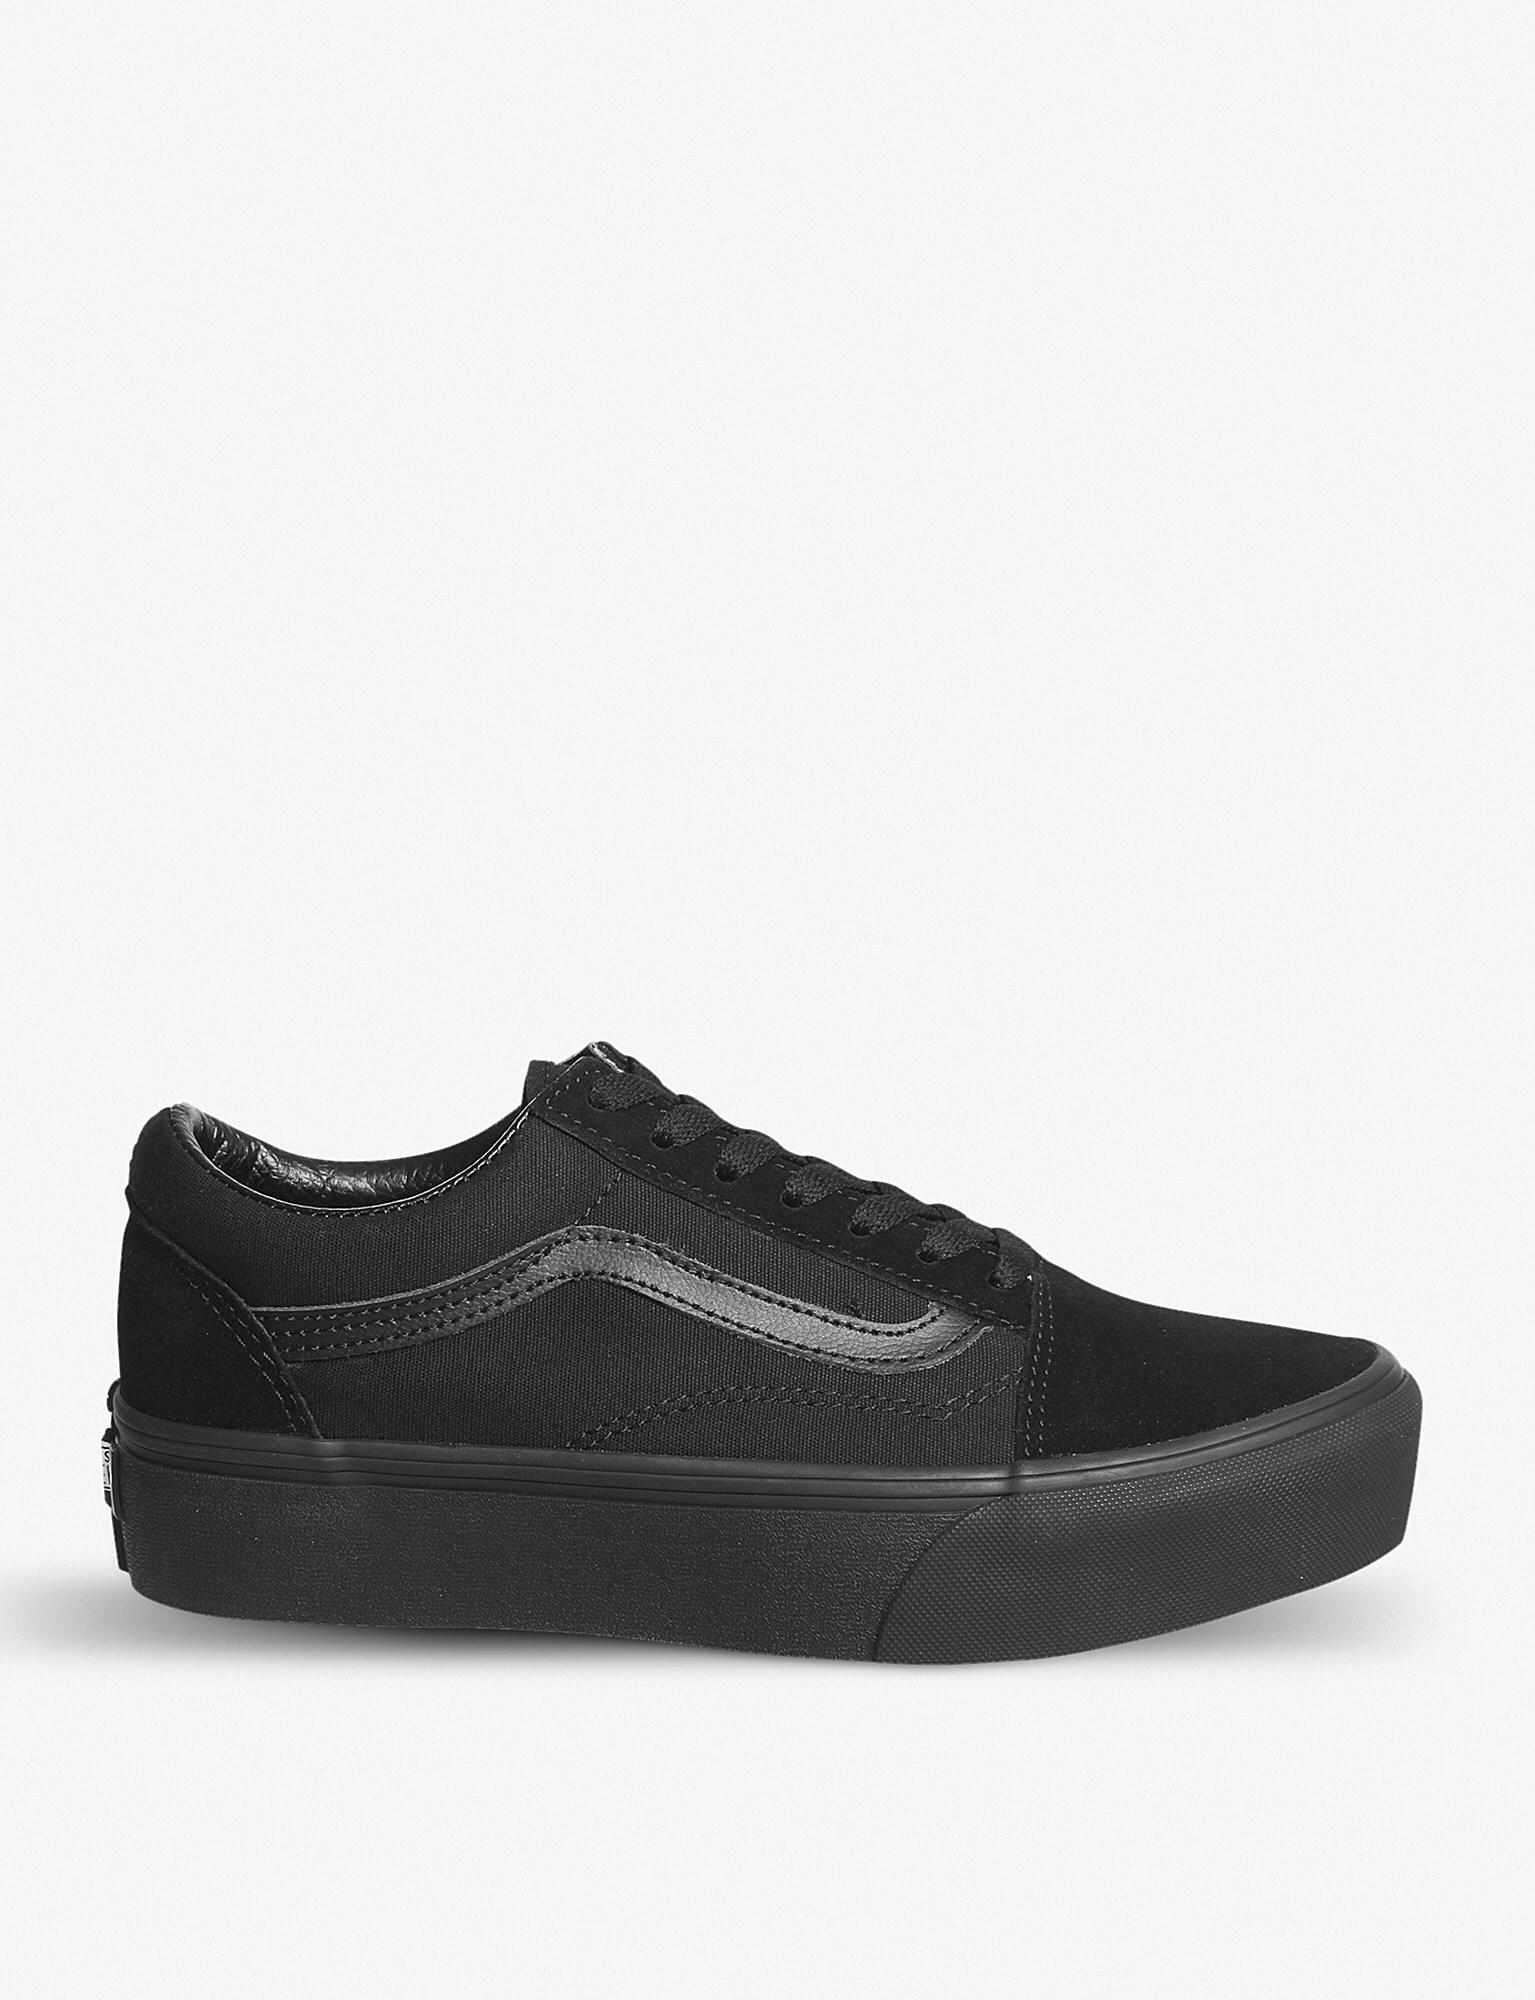 vans black leather trainers